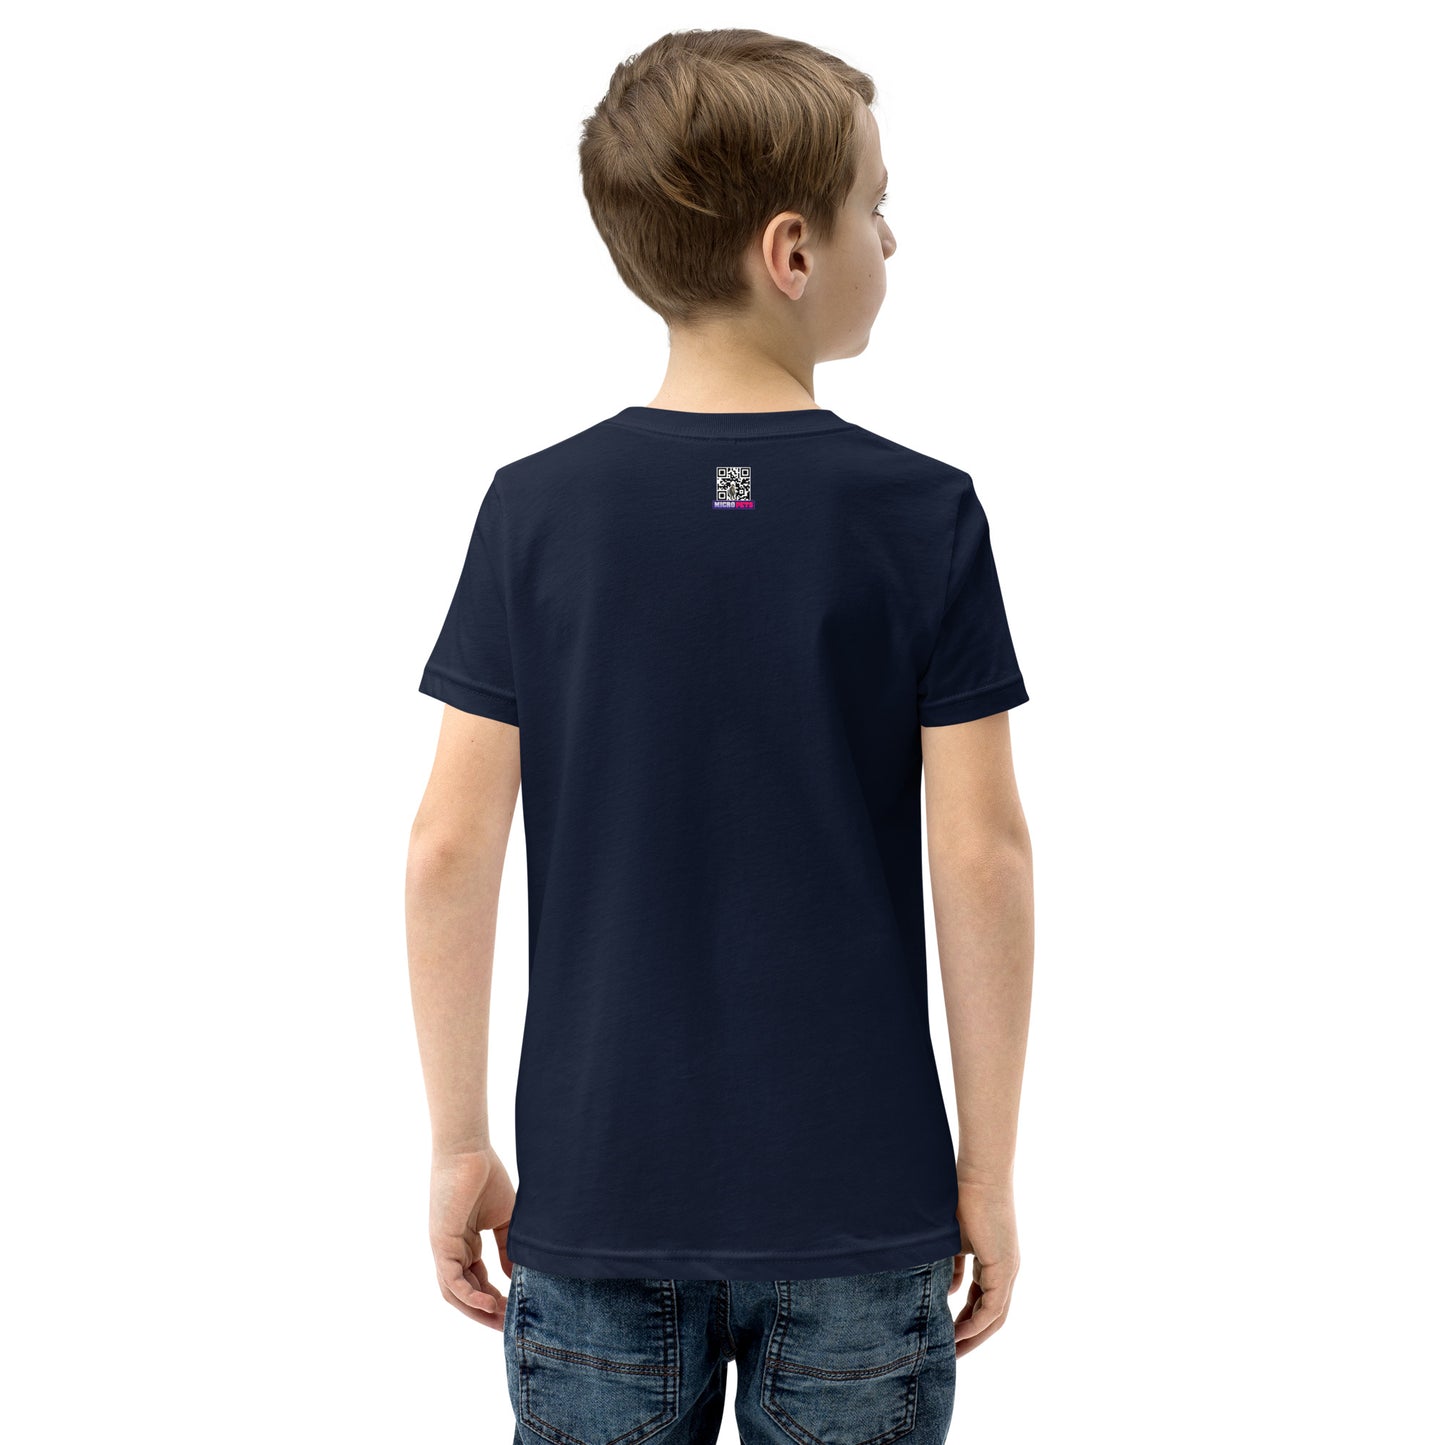 MicroPets Feg Youth T-Shirt